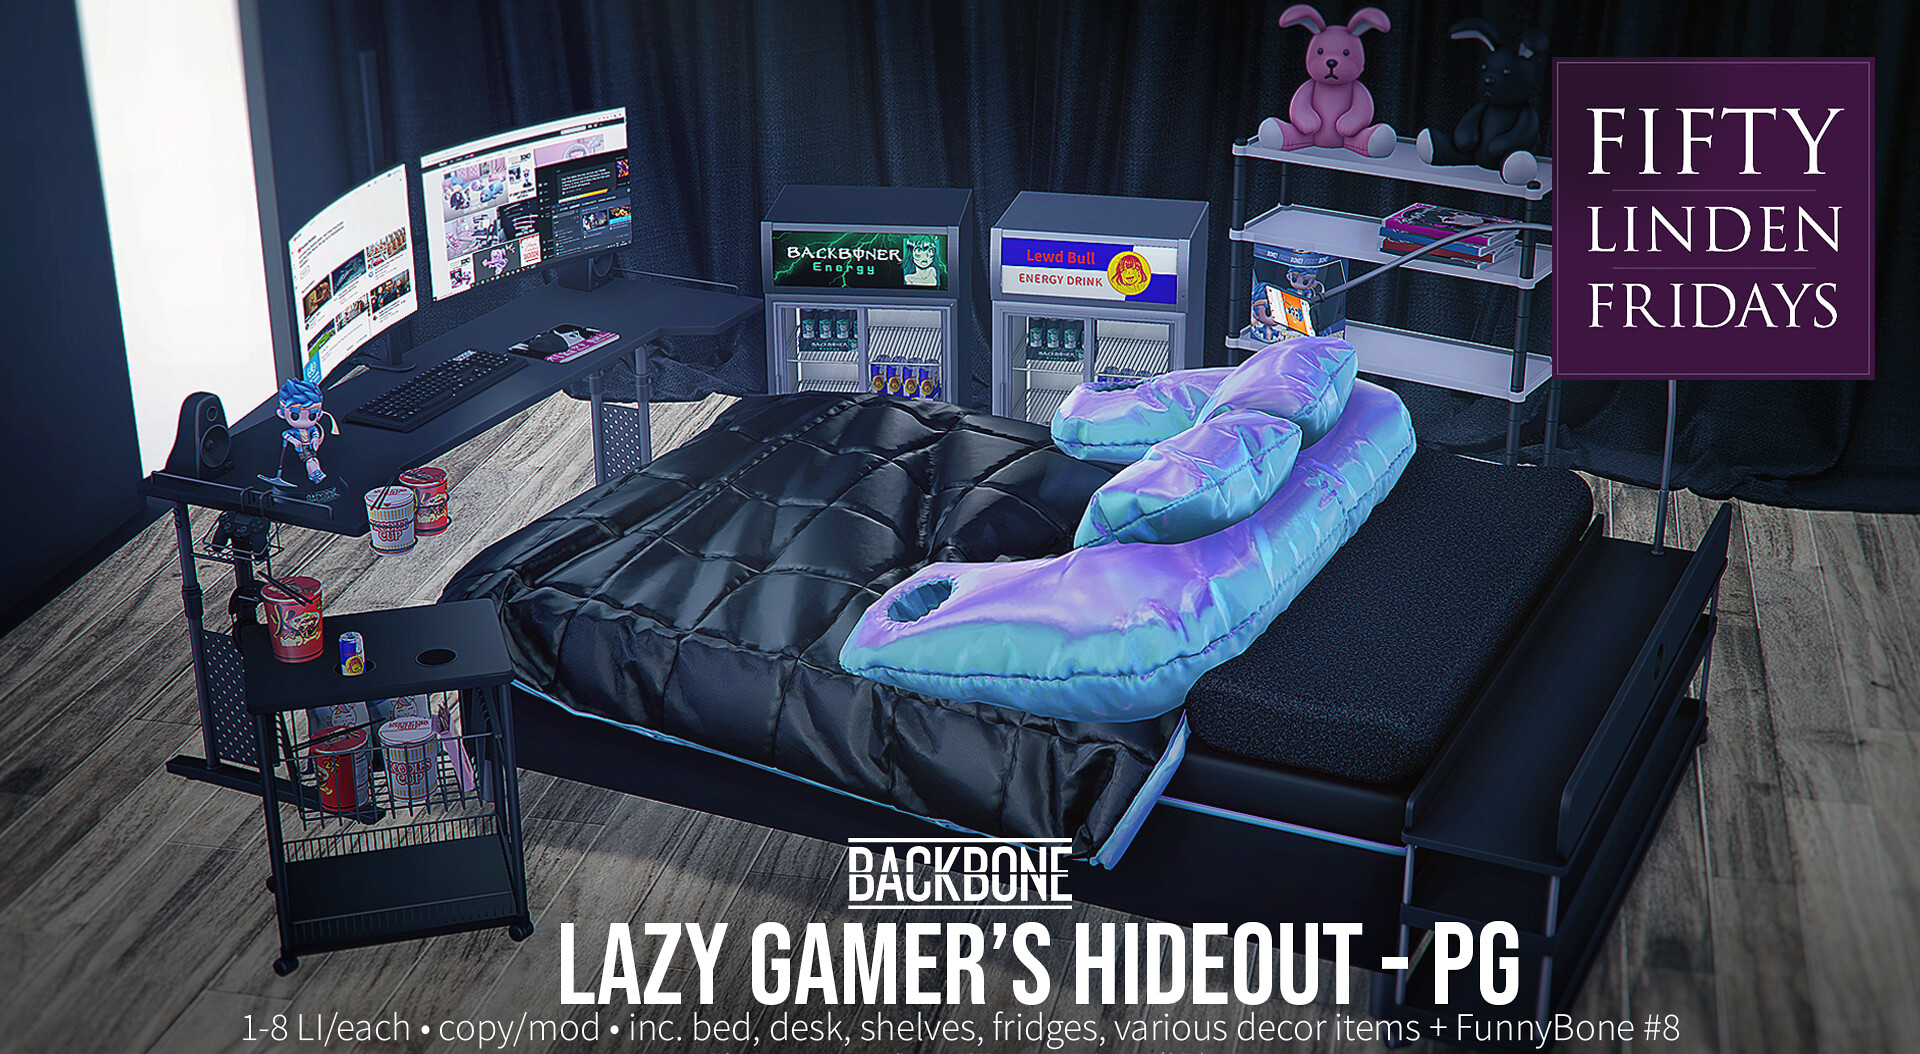 BackBone – Lazy Gamer’s Hideout PG